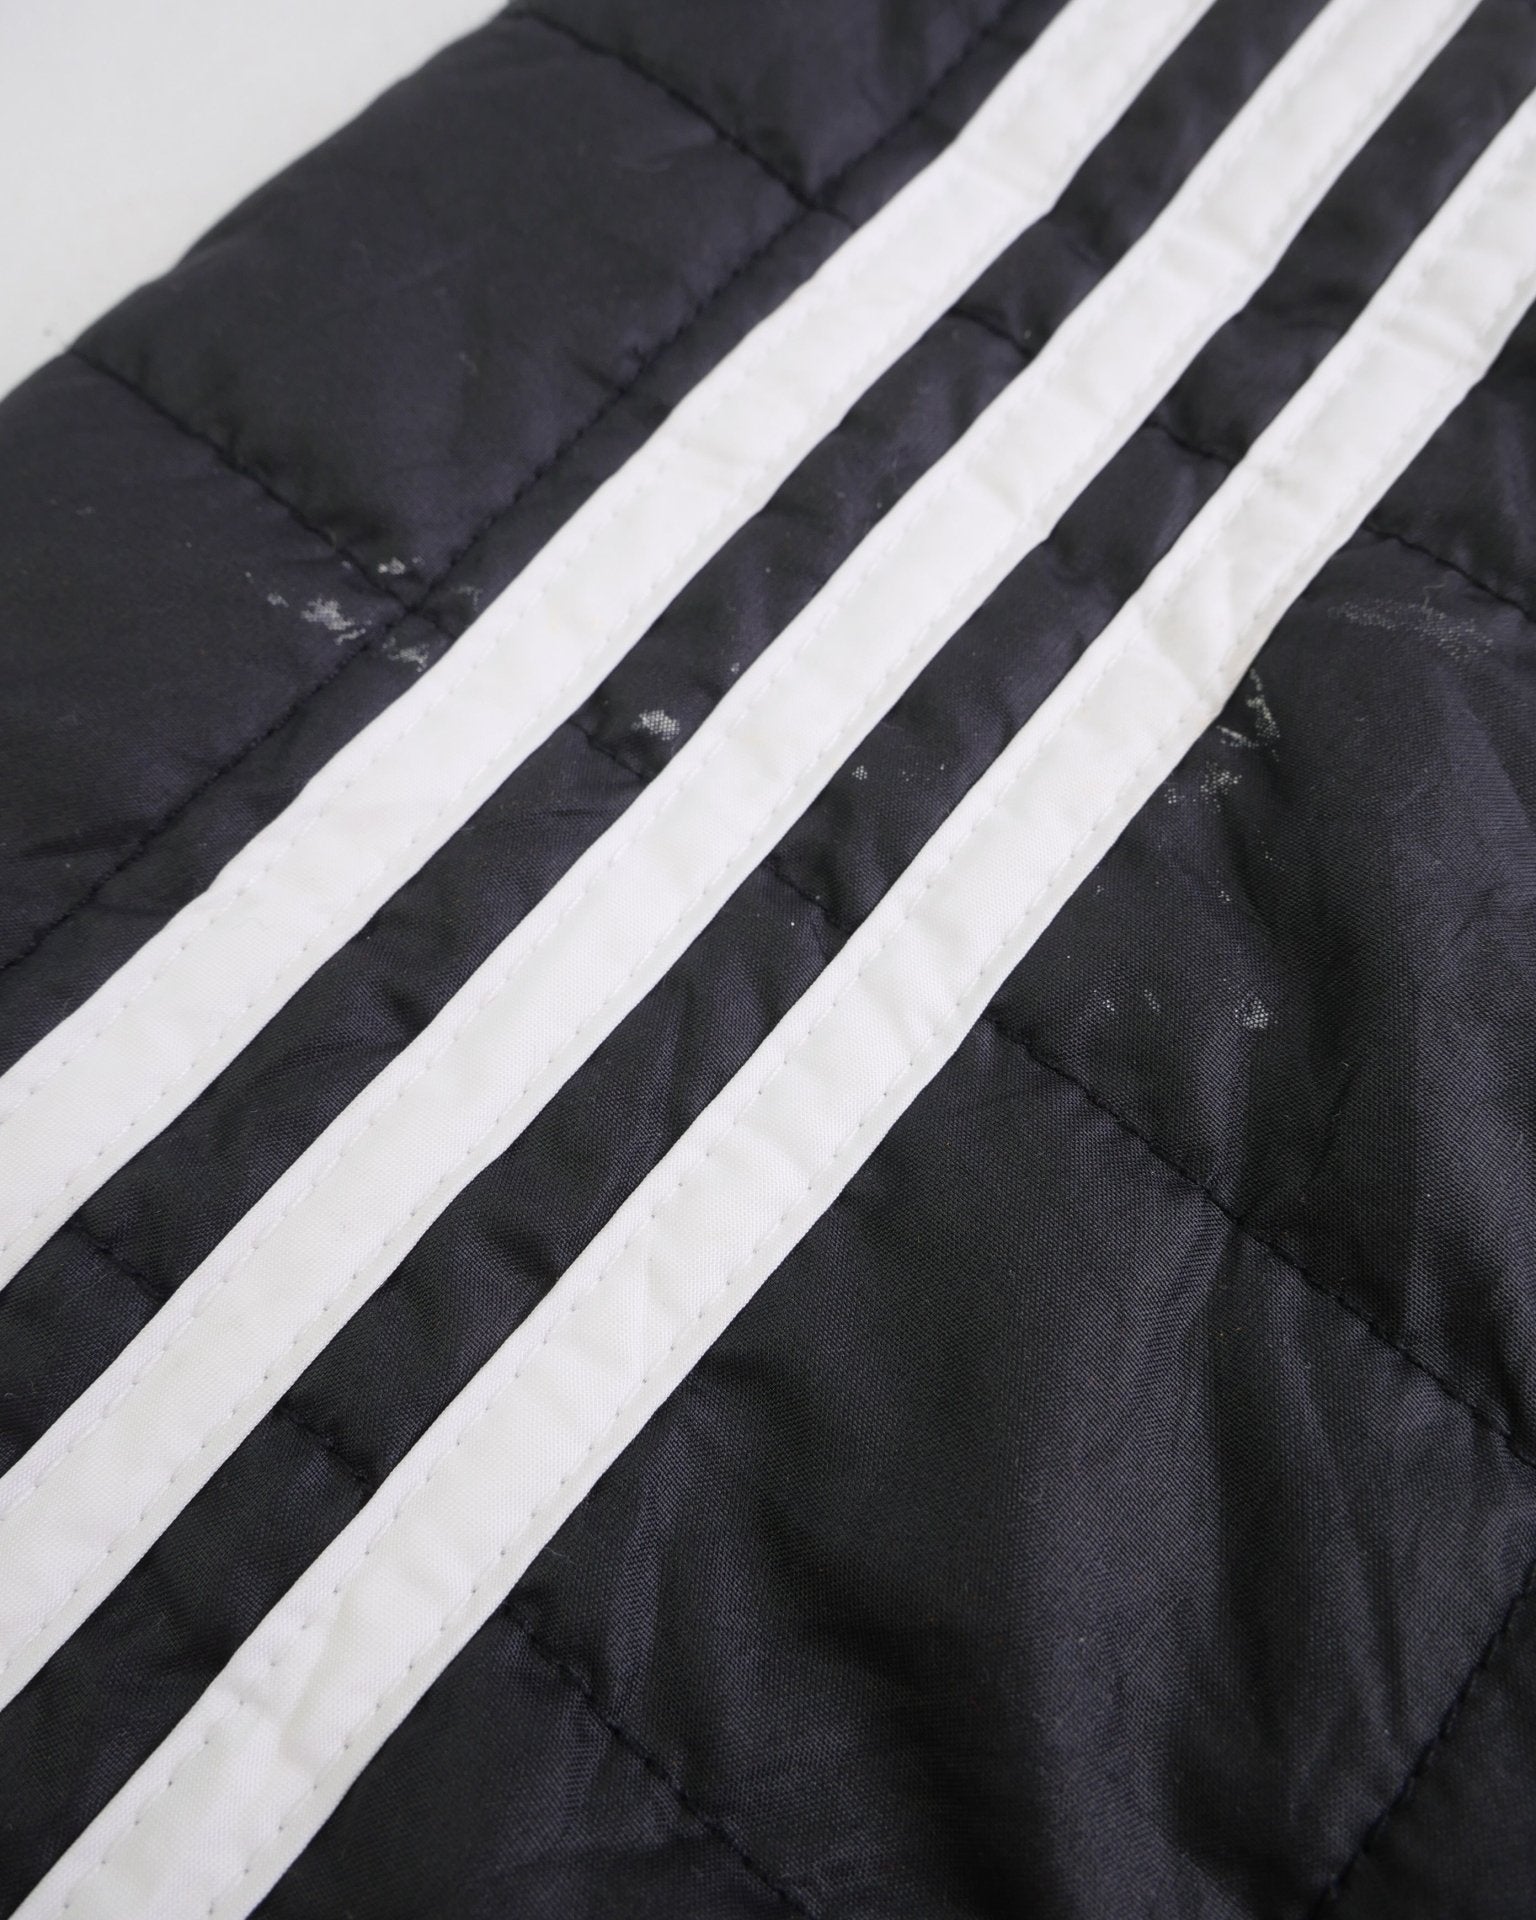 Adidas printed Logo black Puffer Jacke - Peeces